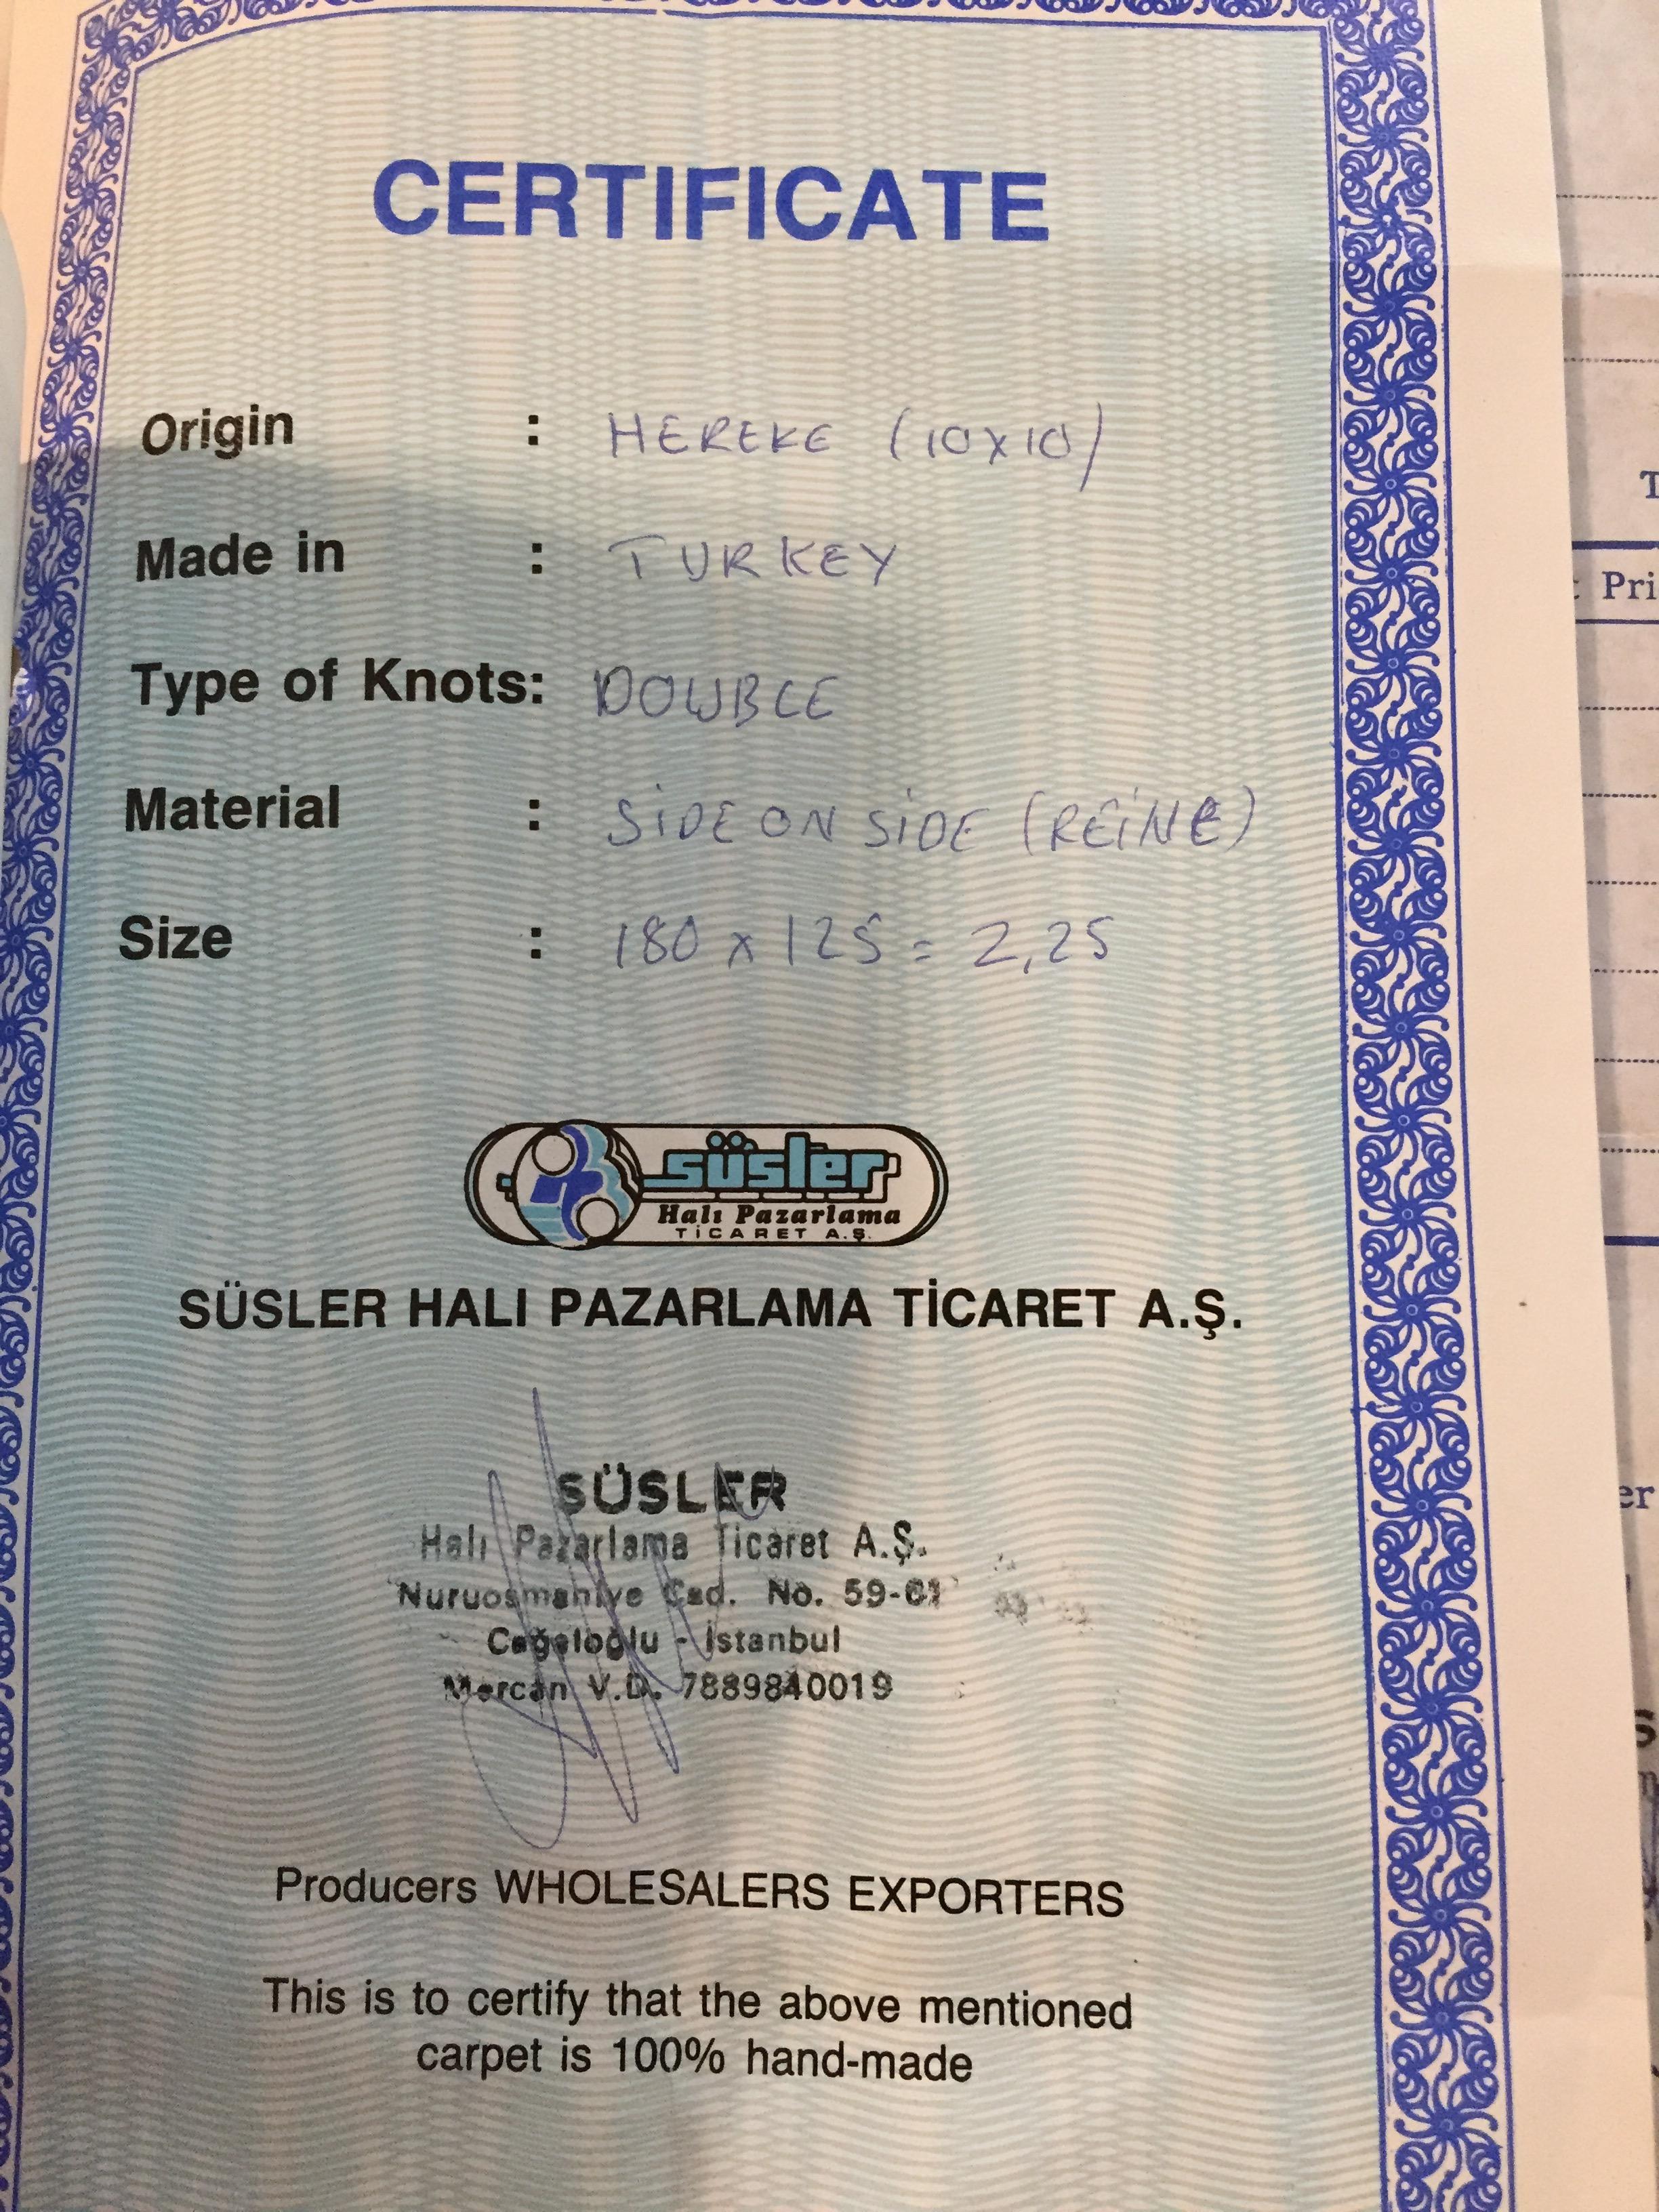 Pure Silk Carpet Region Hereke Turkey with Certificate 13